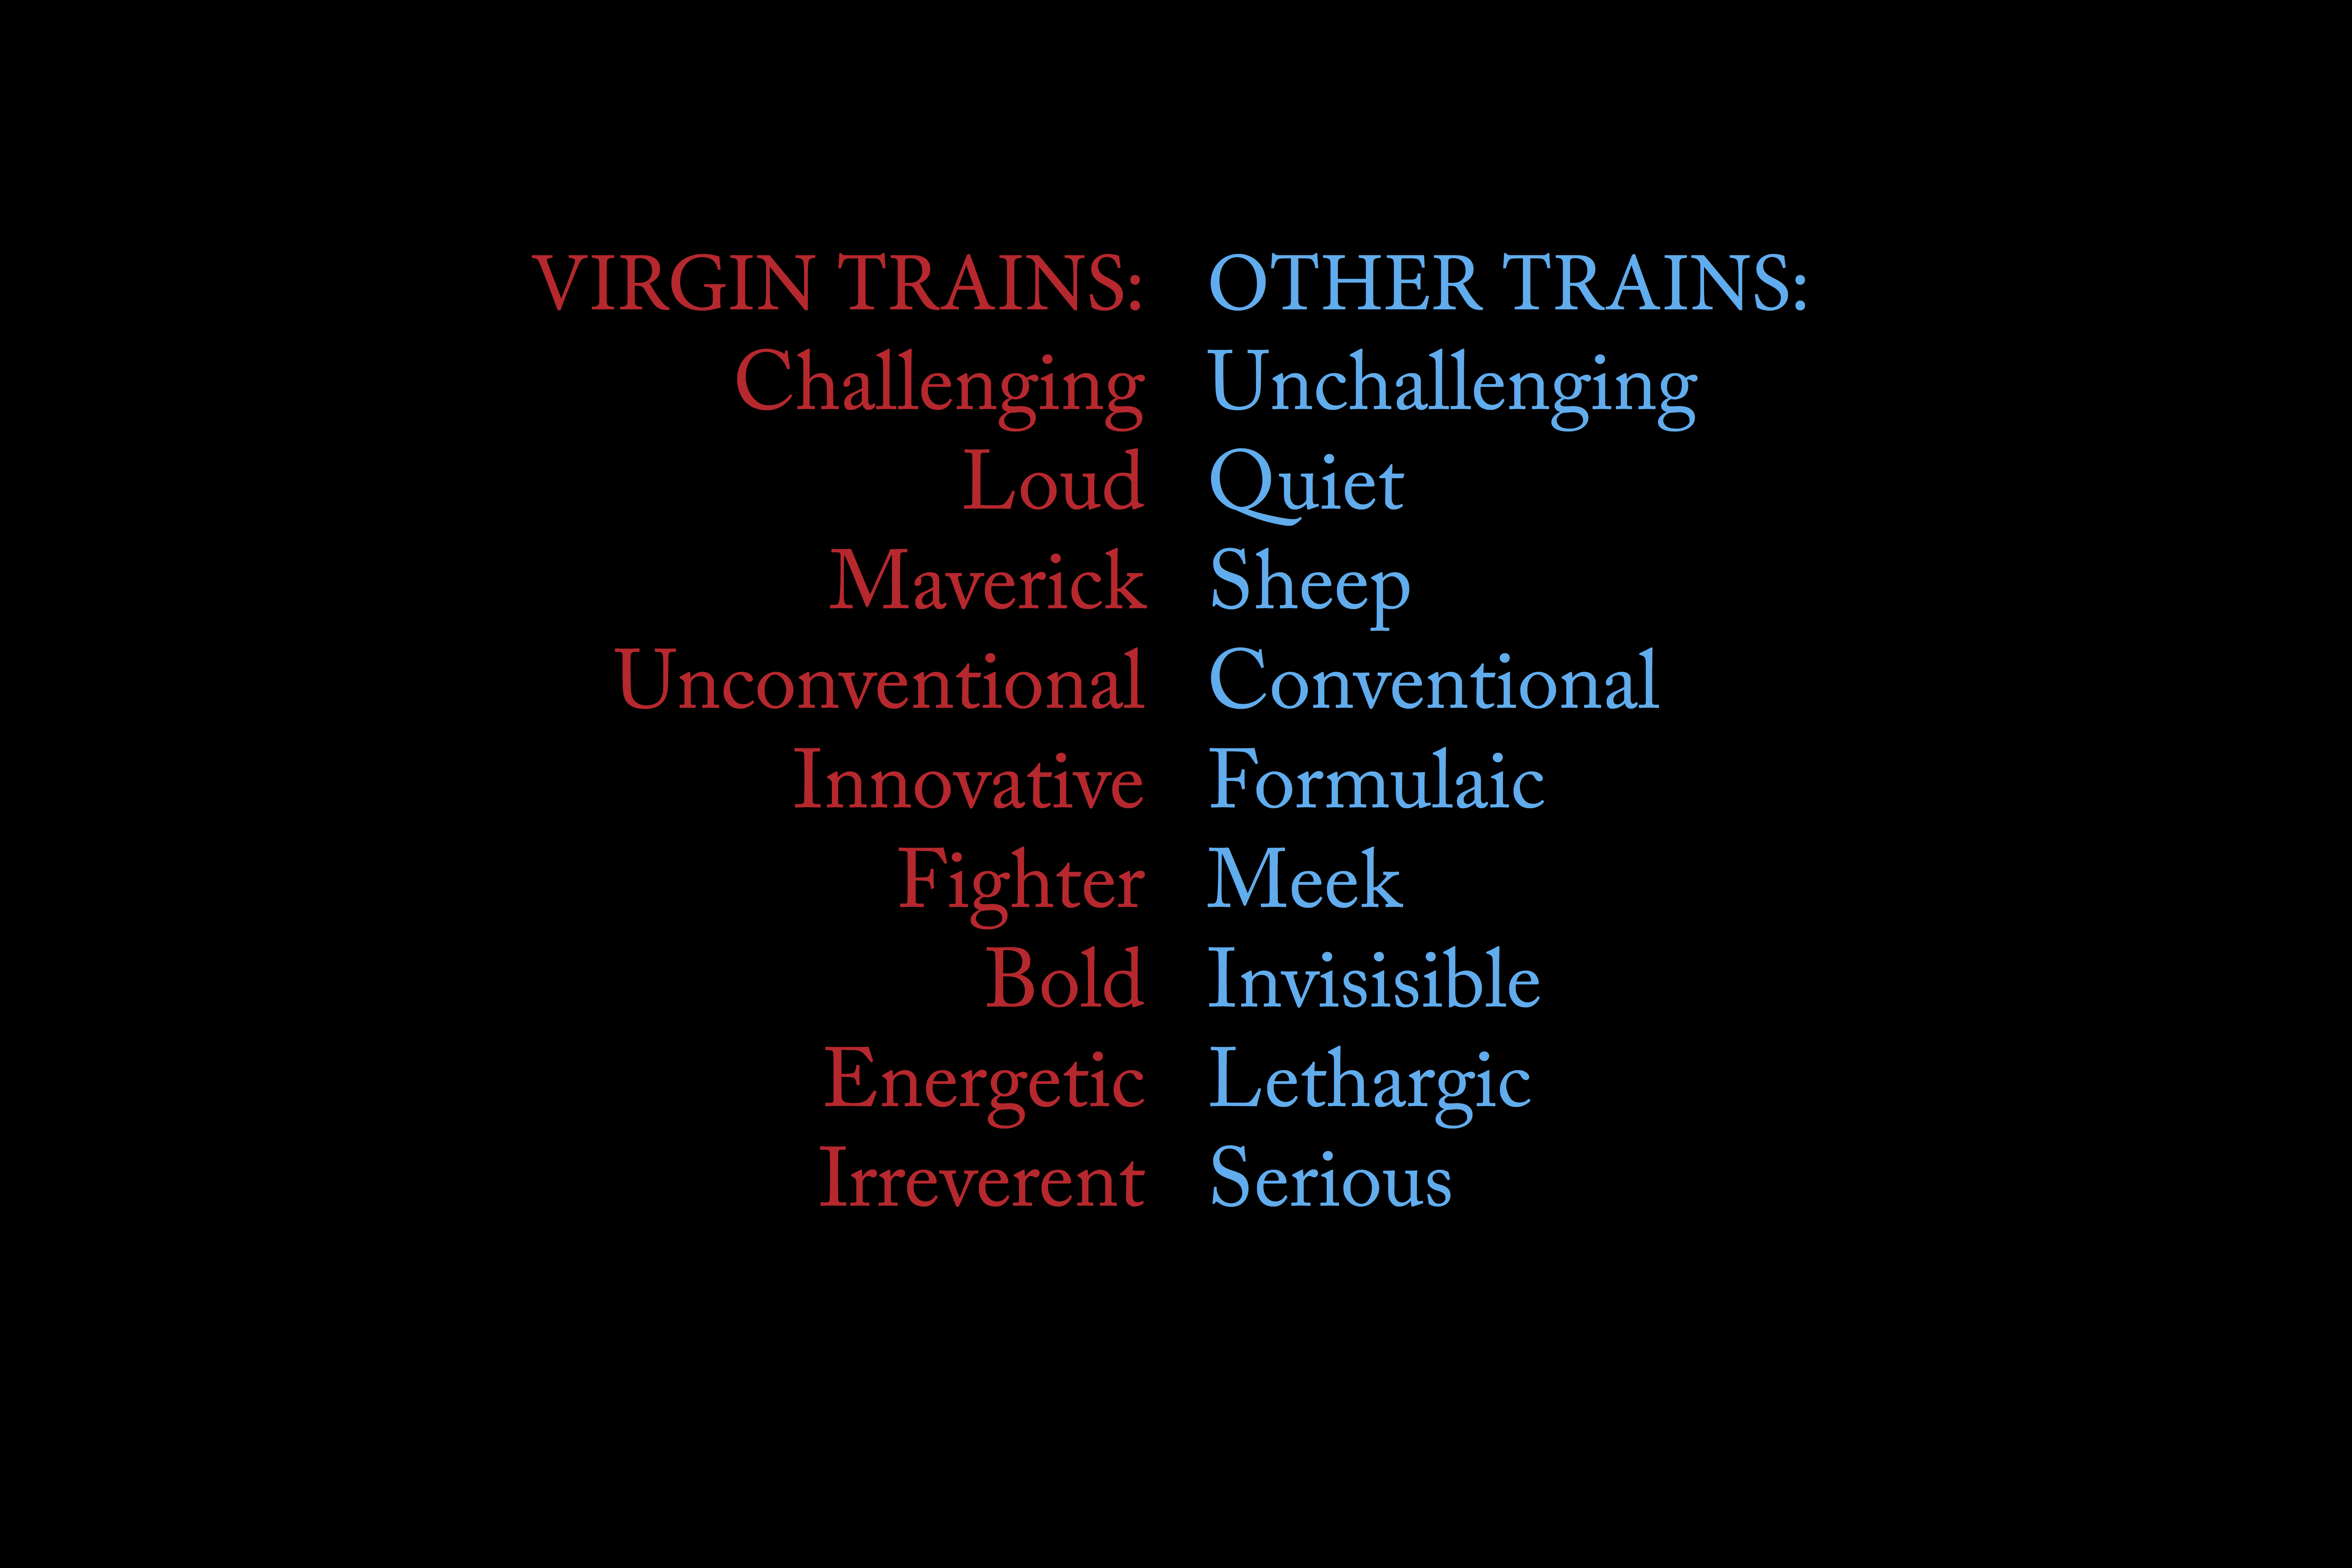 Virin Trains:Other Trains.jpg